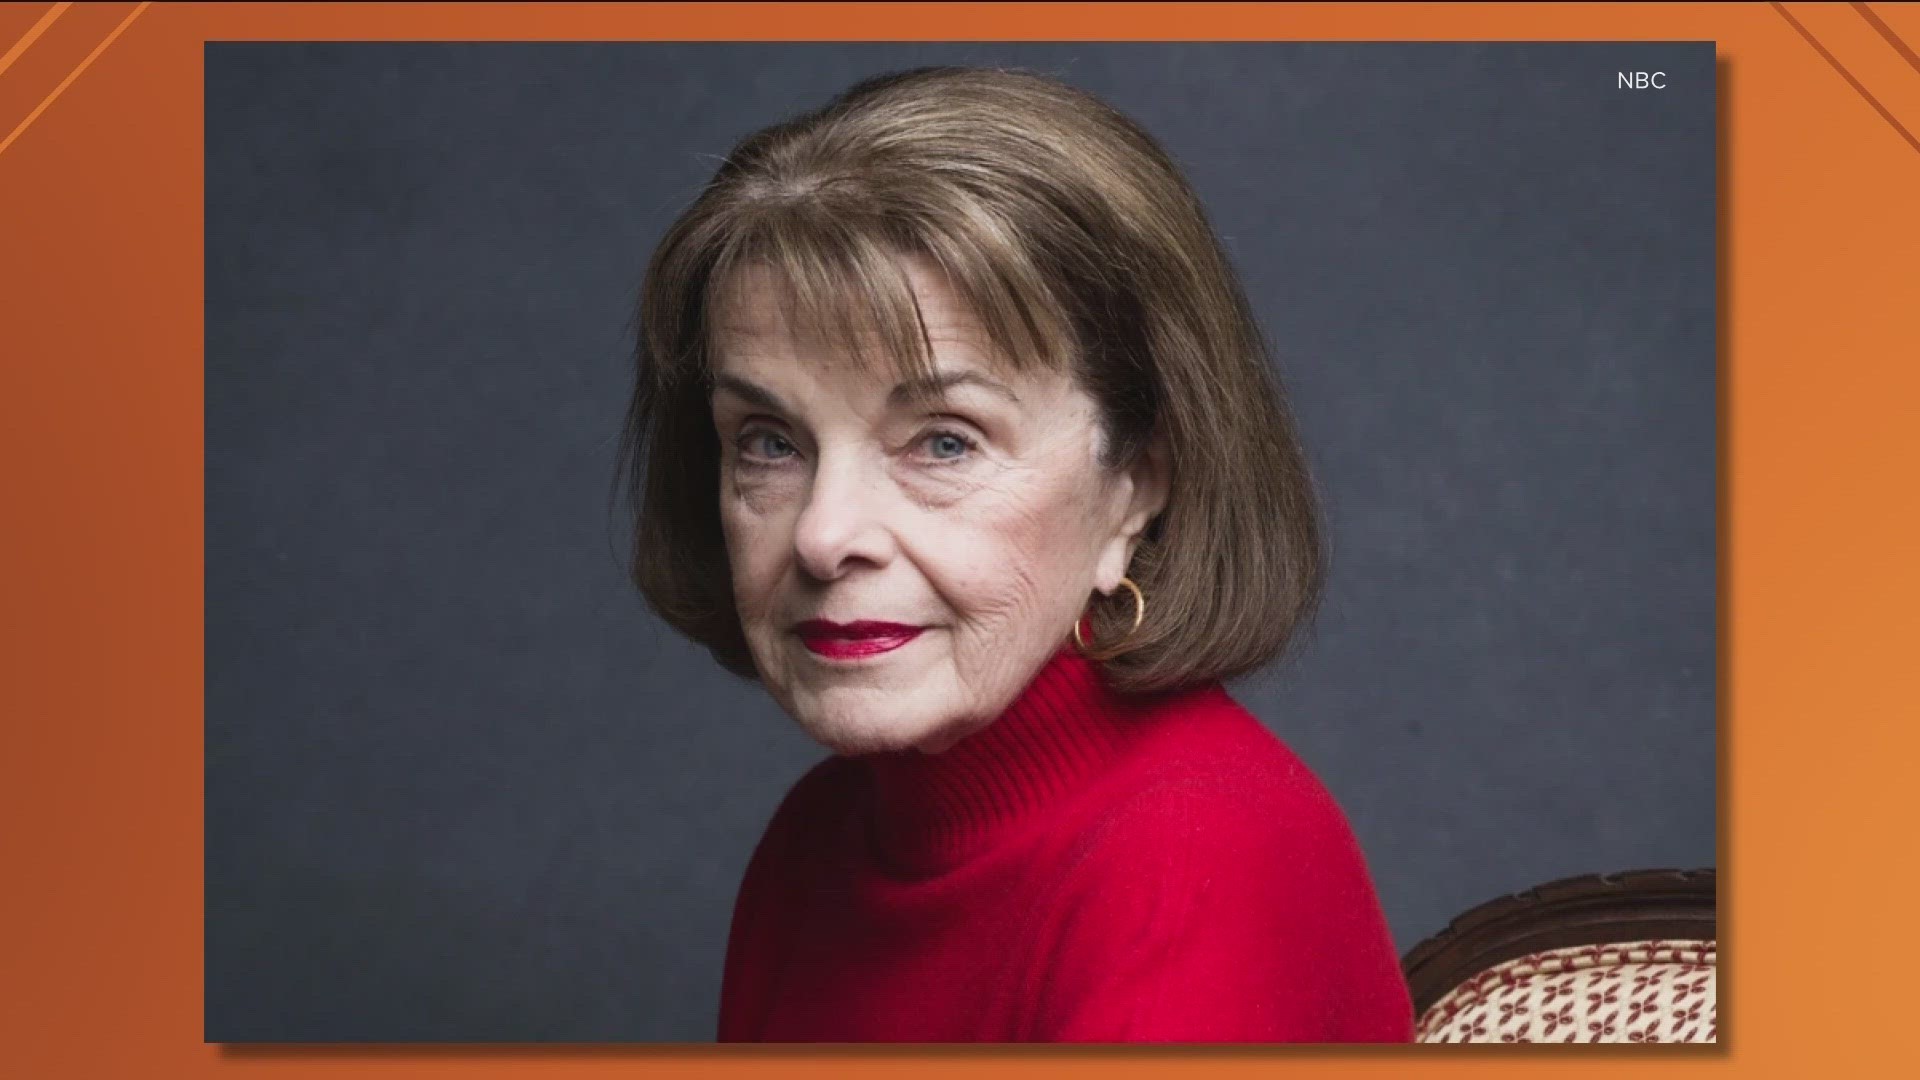 Long time serving Senator Dianne Feinstein has died at 90.